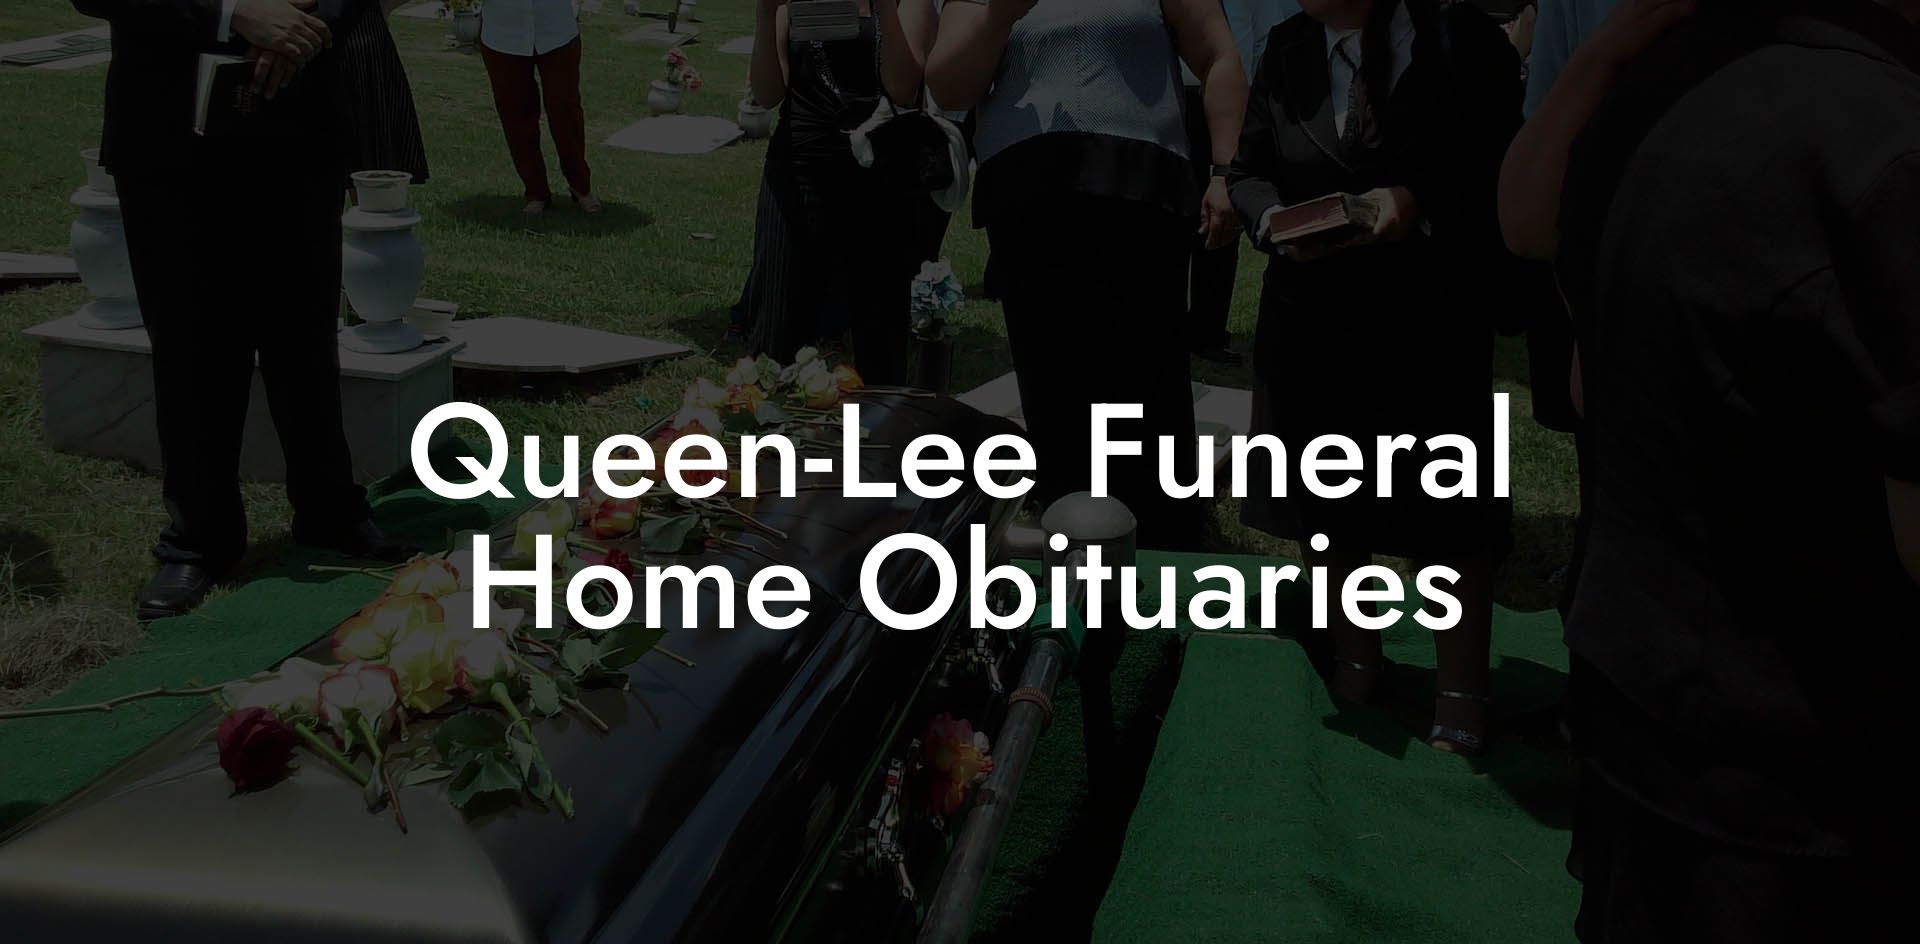 Queen-Lee Funeral Home Obituaries